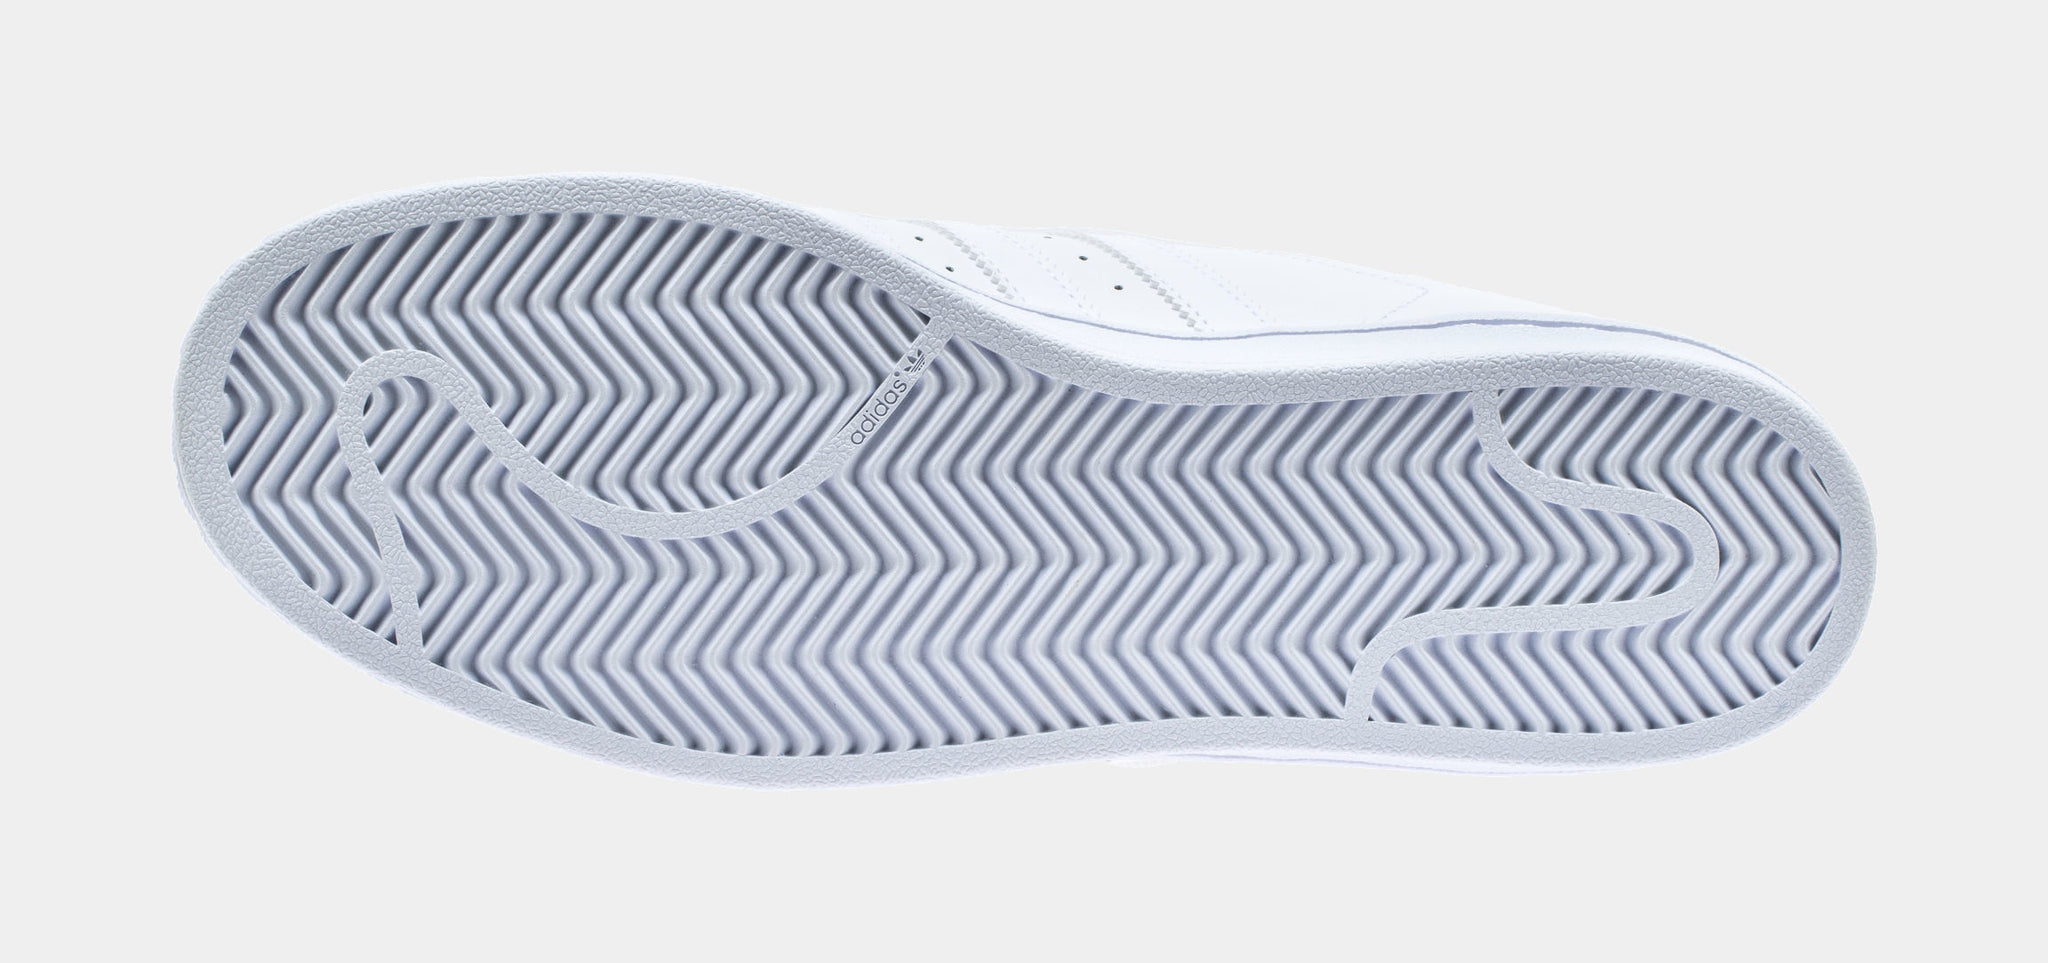 Mens Adidas Superstar Shelltoe sz 13 White green blue stripe sneakers shoes